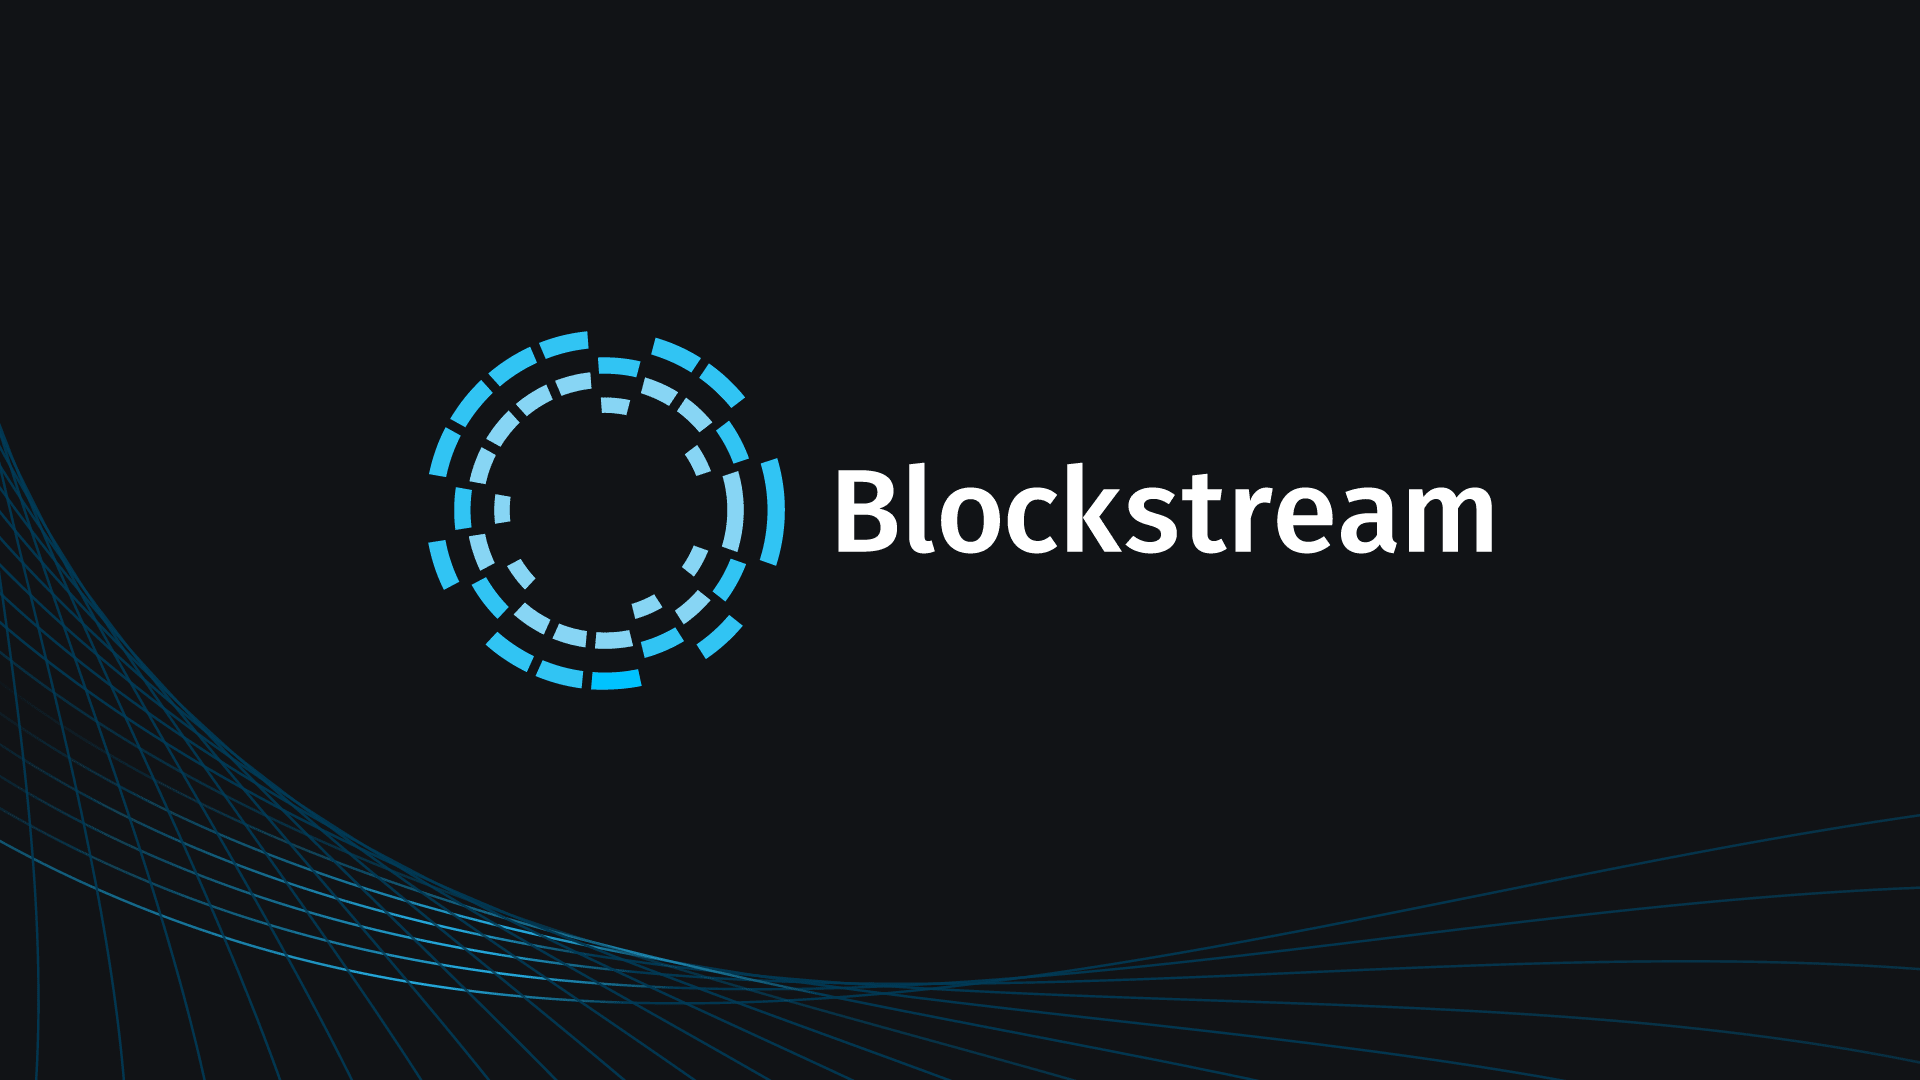 blockstream